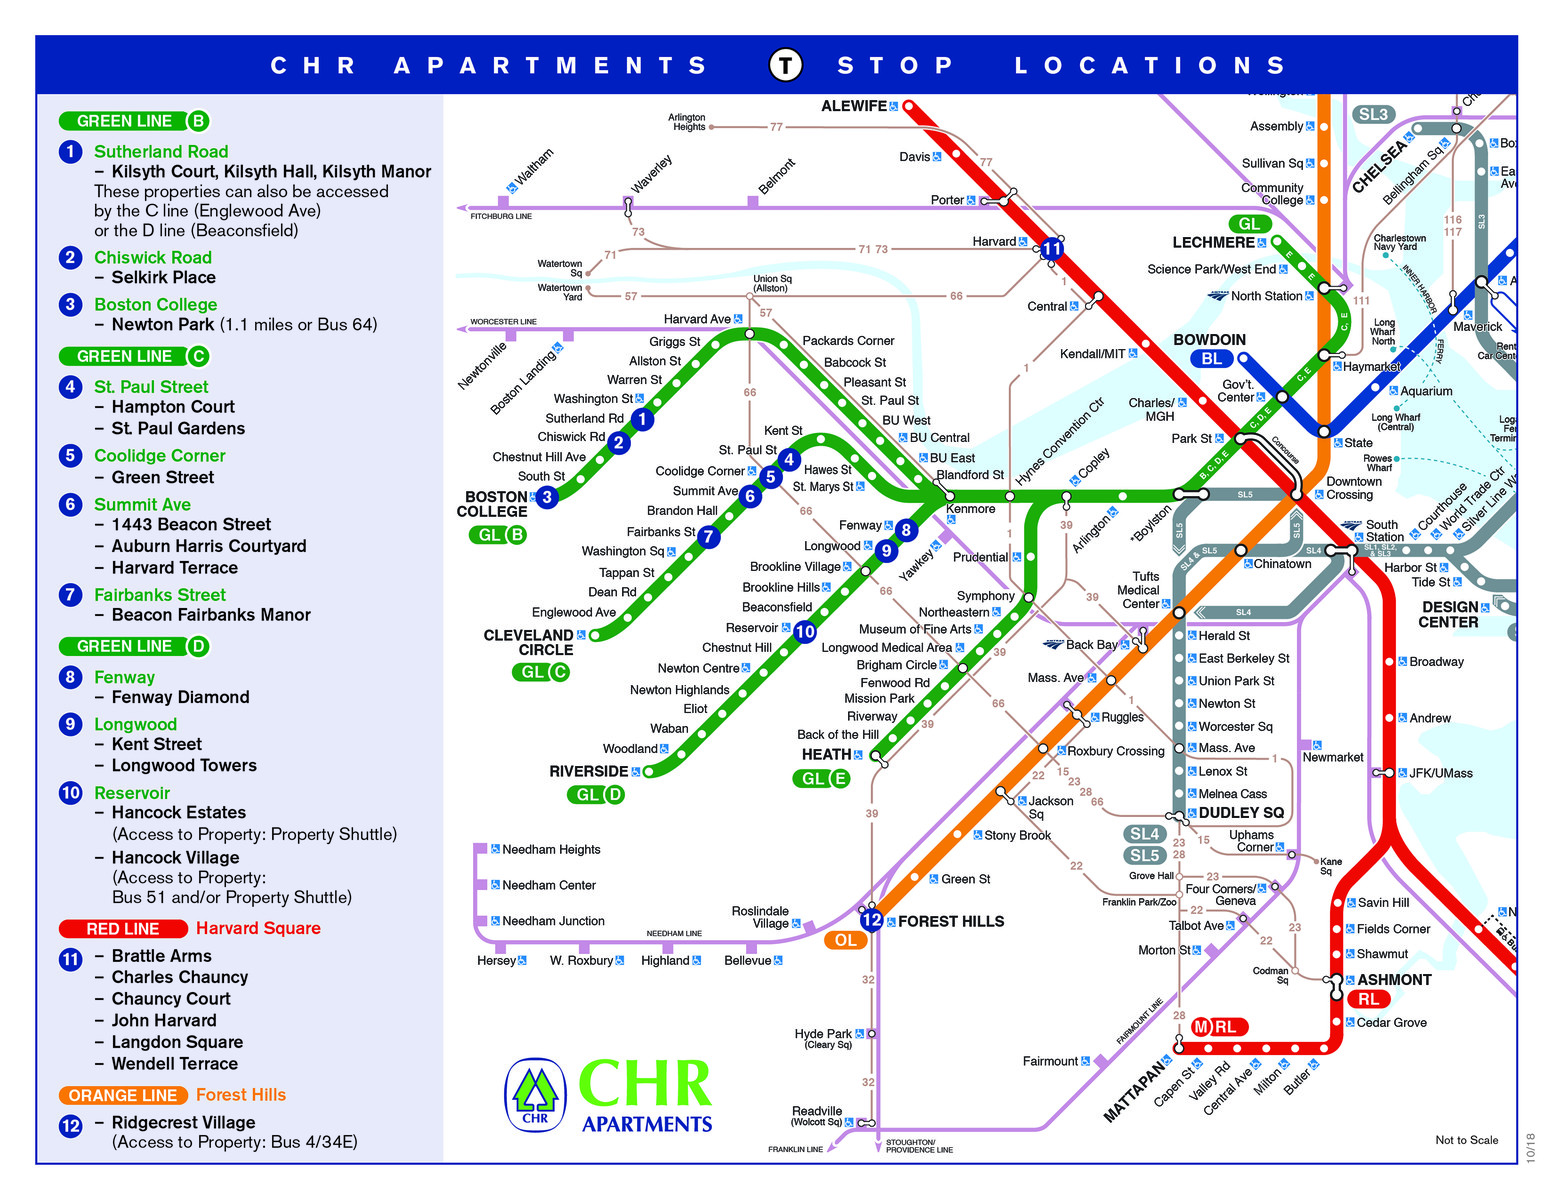 MBTA Map with CHR Locations near public transportation